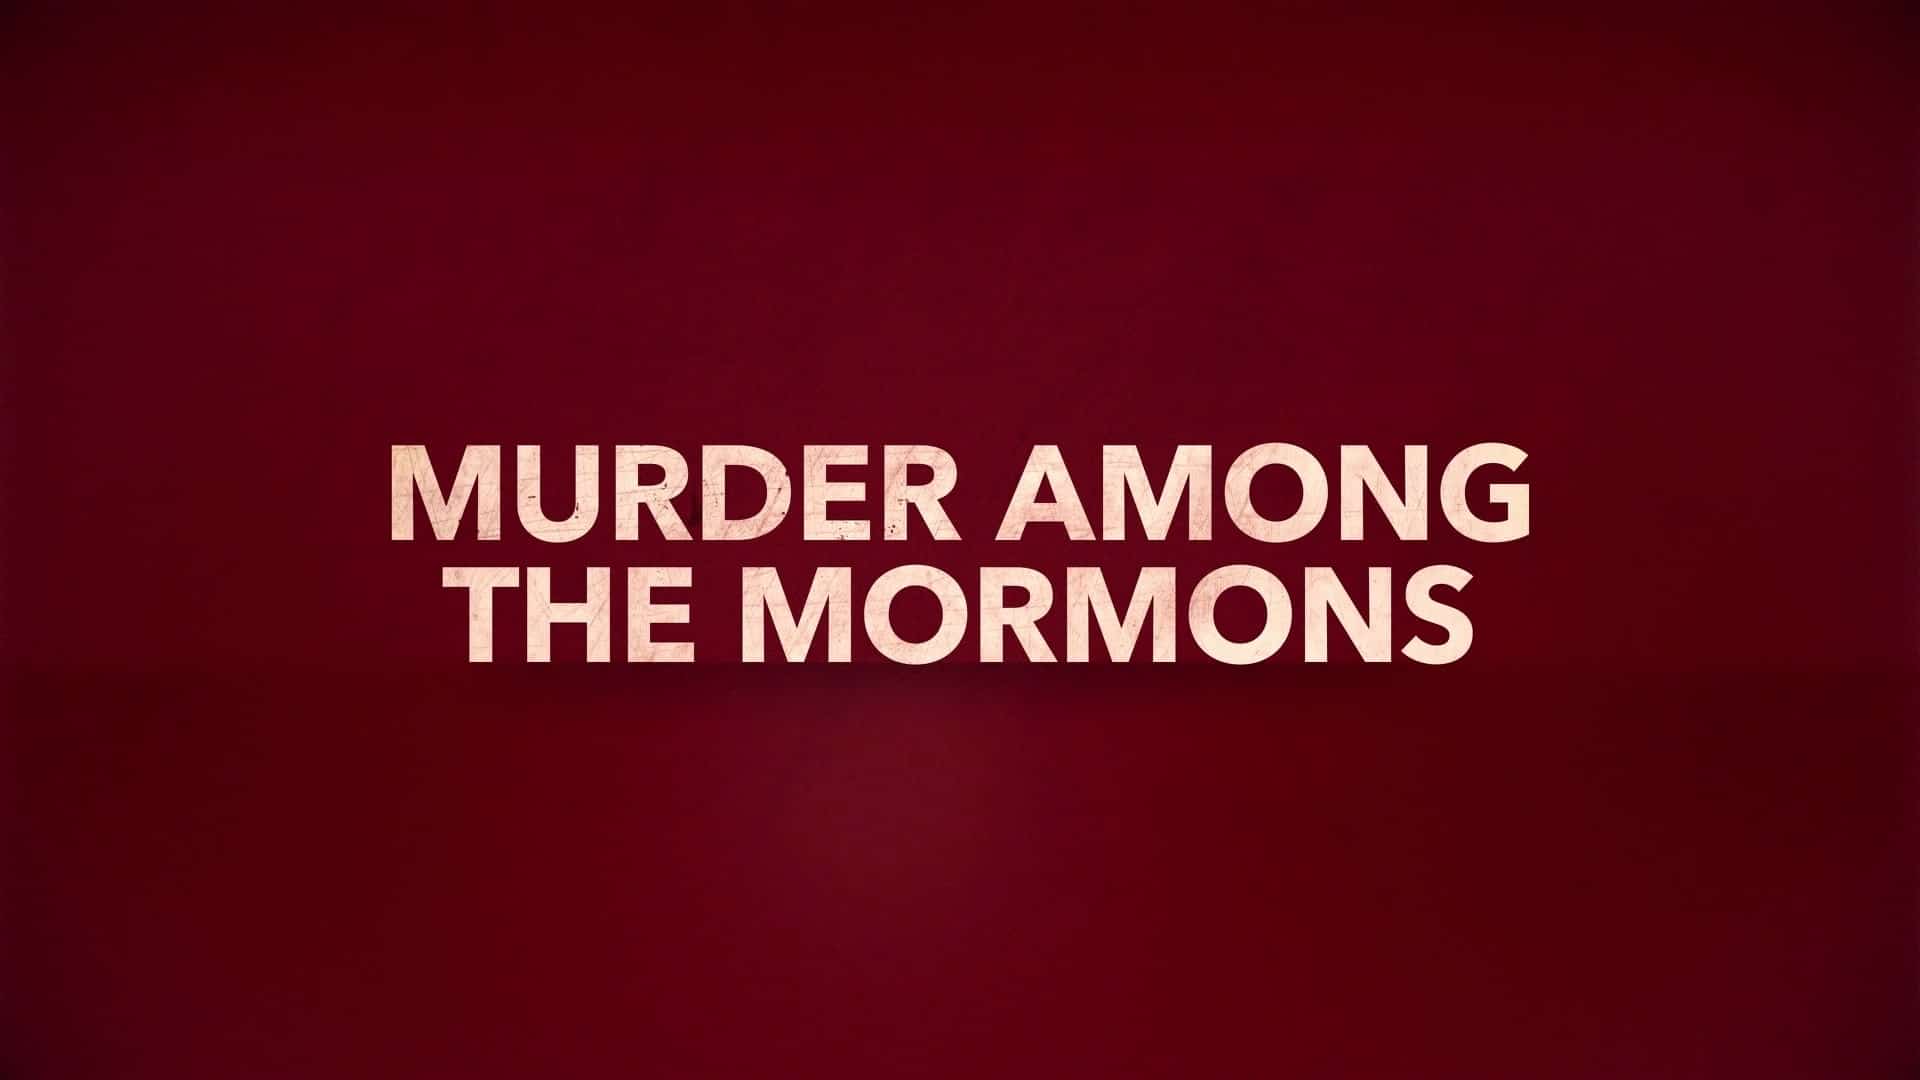 Netflix Murder Among the Mormons Trailer, Netflix Documentaries, Netflix Crime Documentary, Coming to Netflix in March 2021